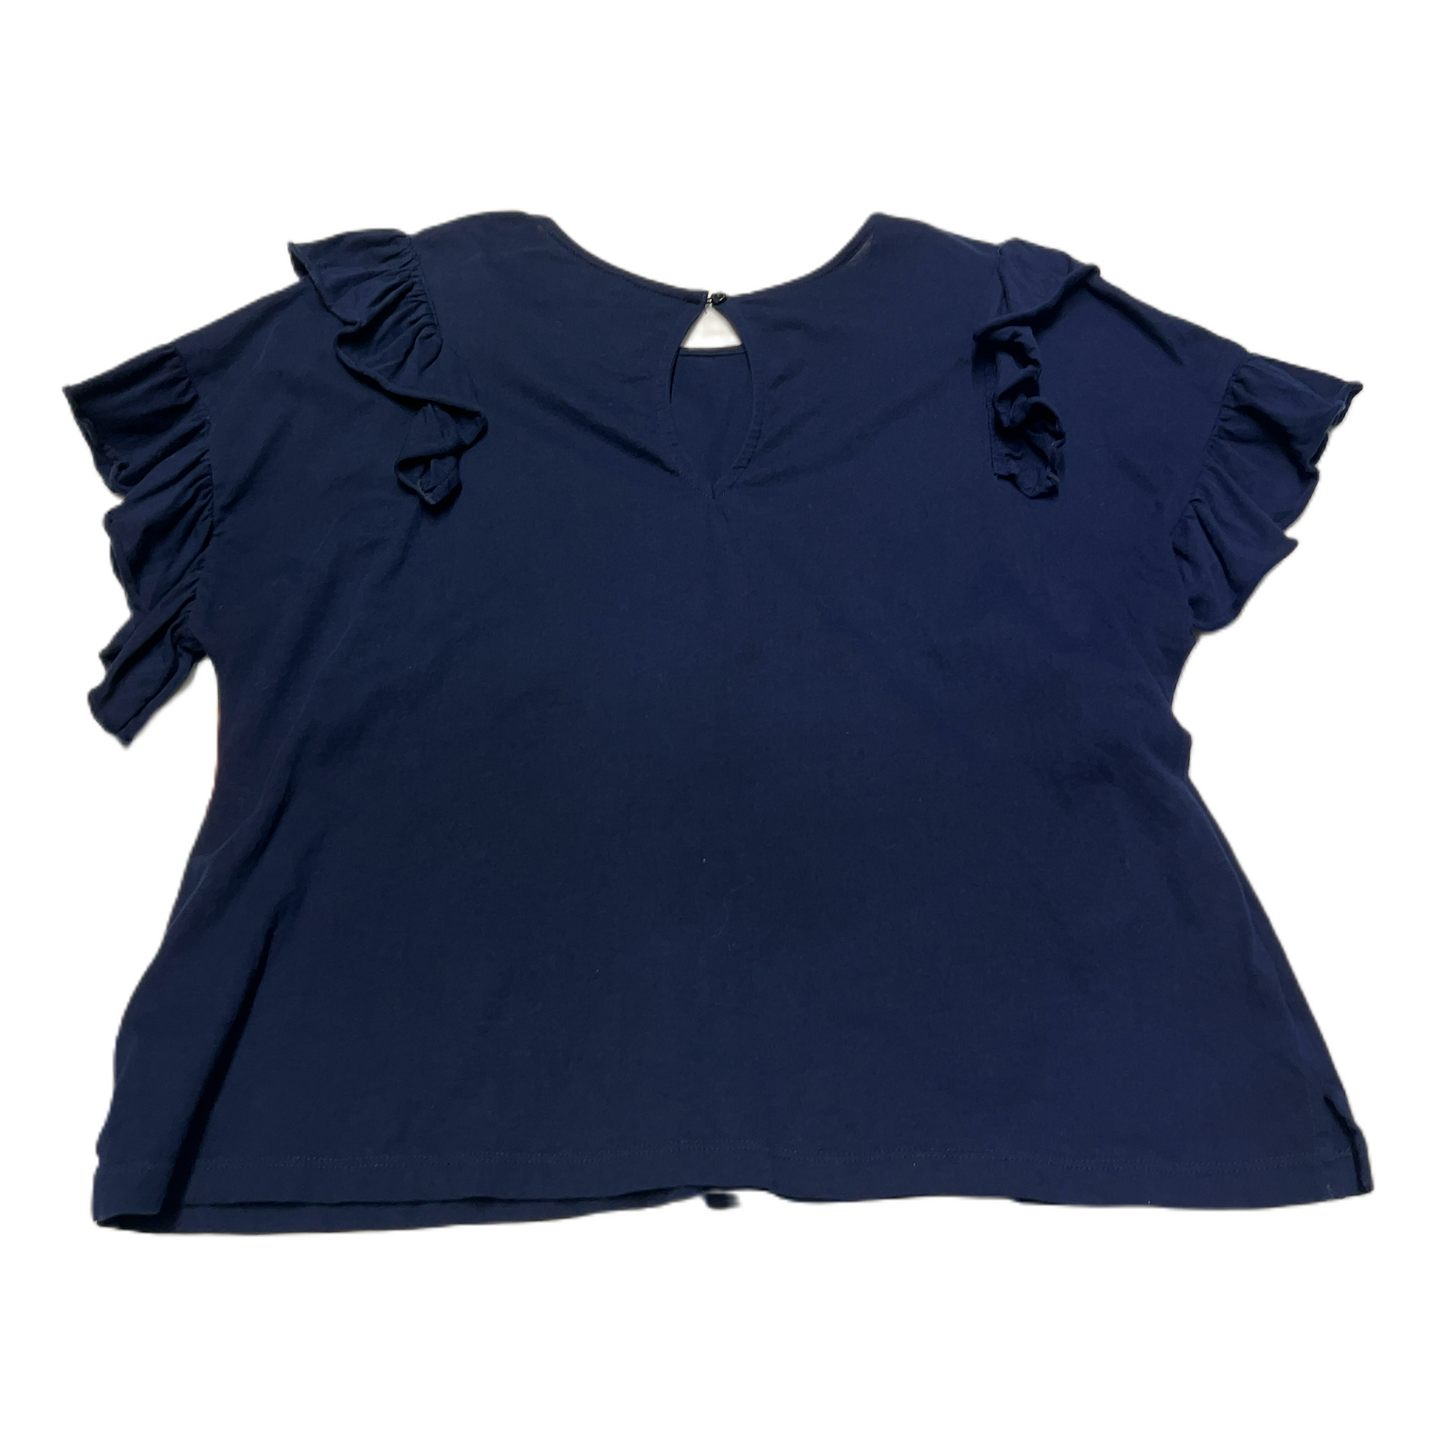 Top Short Sleeve By Kaari Blue  Size: L